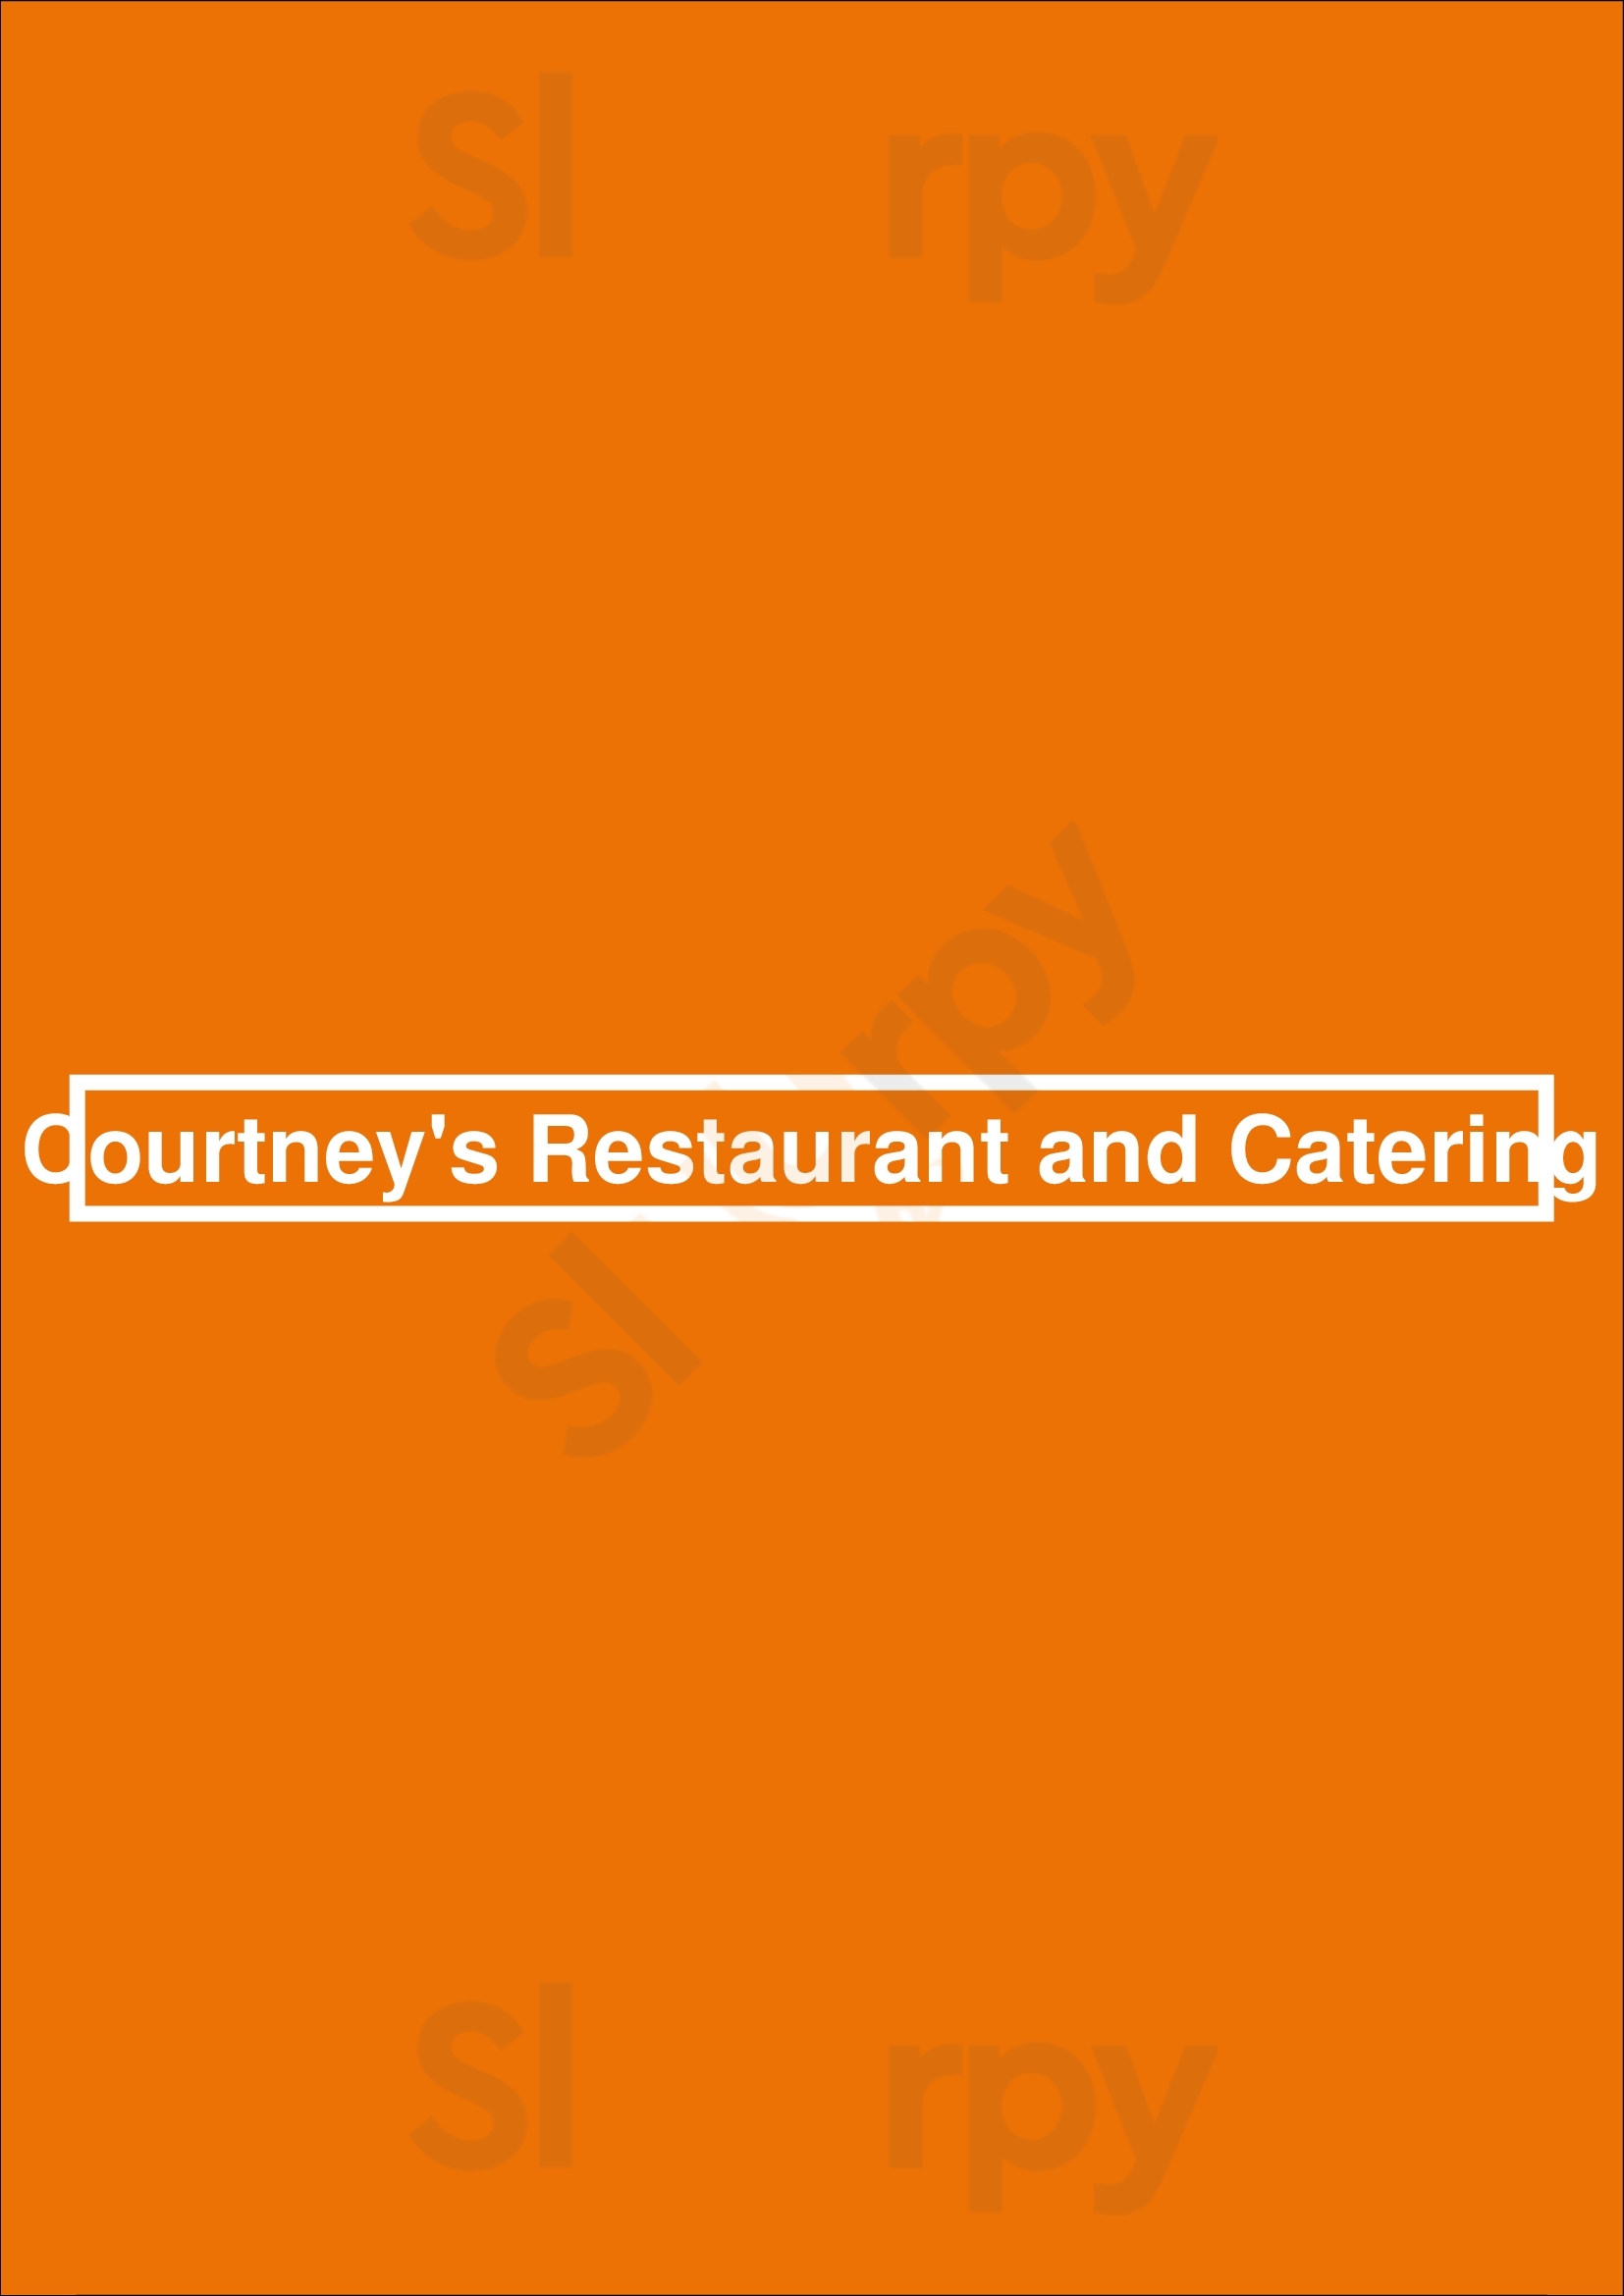 T.j. Courtney's Restaurant And Catering Mount Juliet Menu - 1